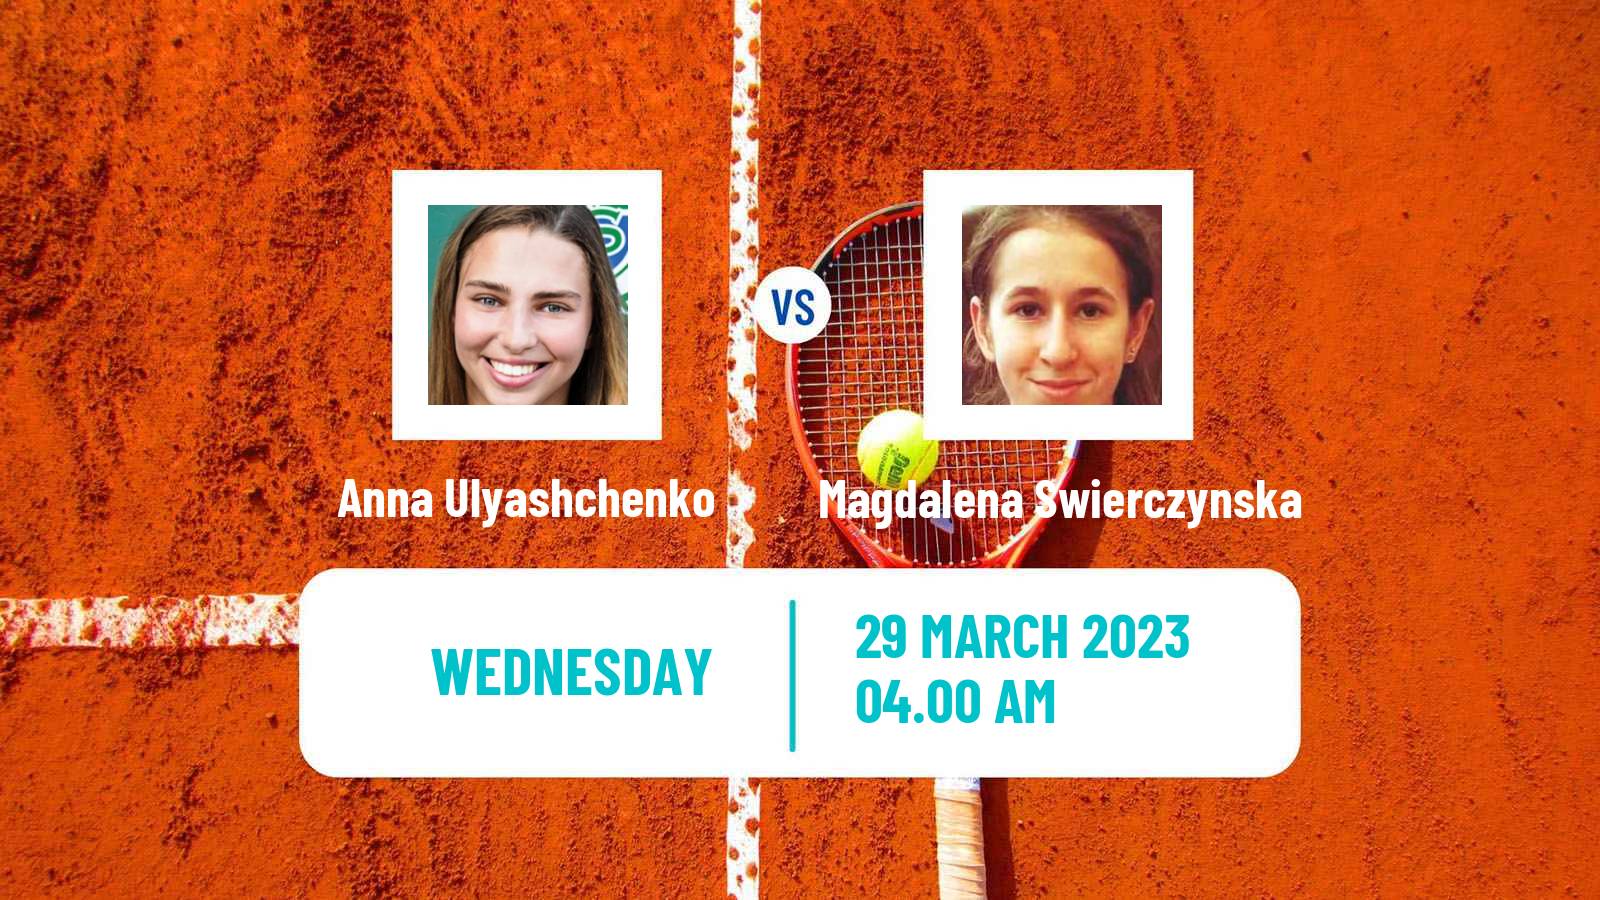 Tennis ITF Tournaments Anna Ulyashchenko - Magdalena Swierczynska